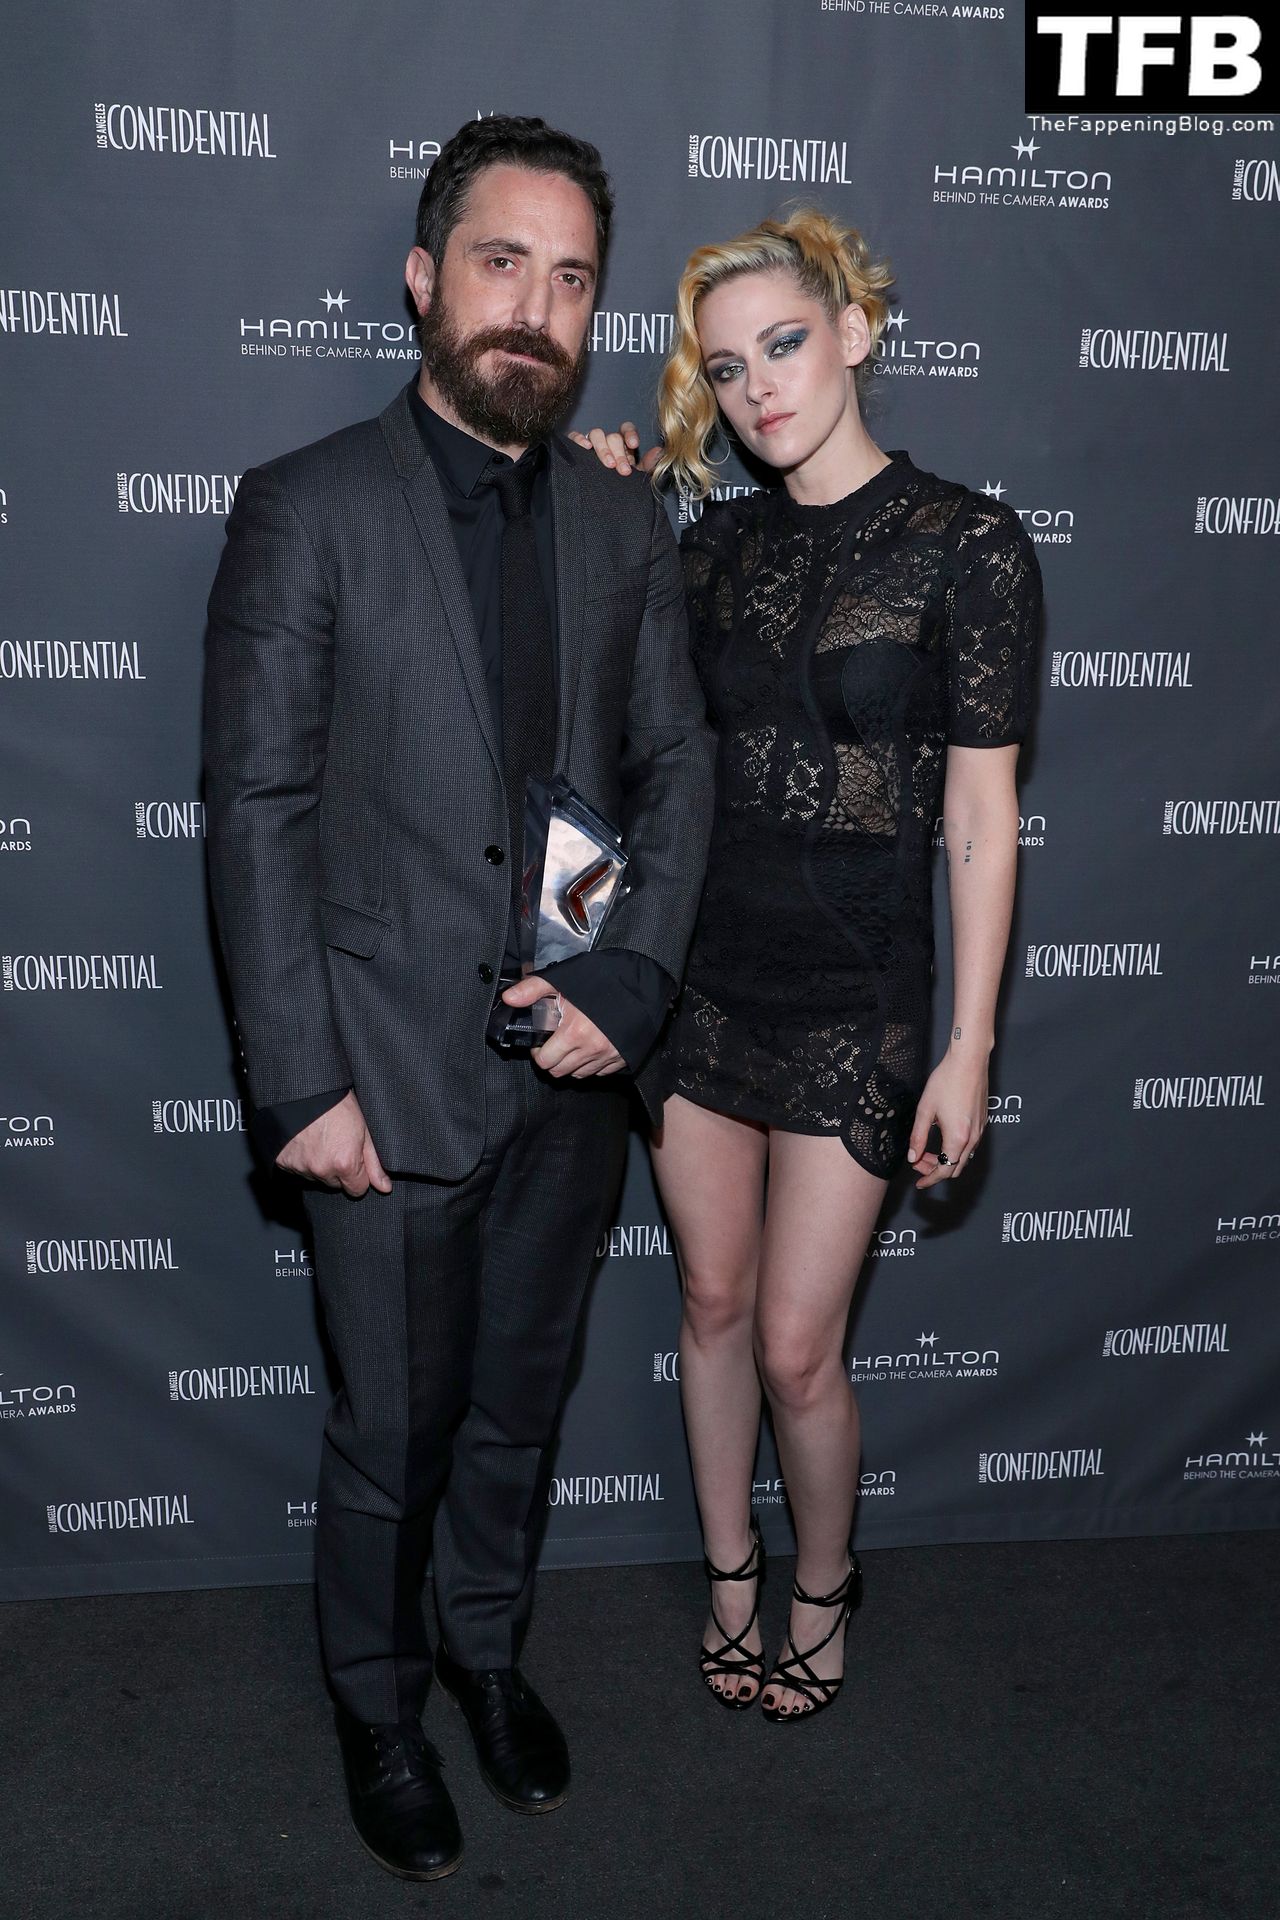 Kristen Stewart Looks Hot at The 11th Hamilton Behind The Camera Awards in LA (24 Photos)